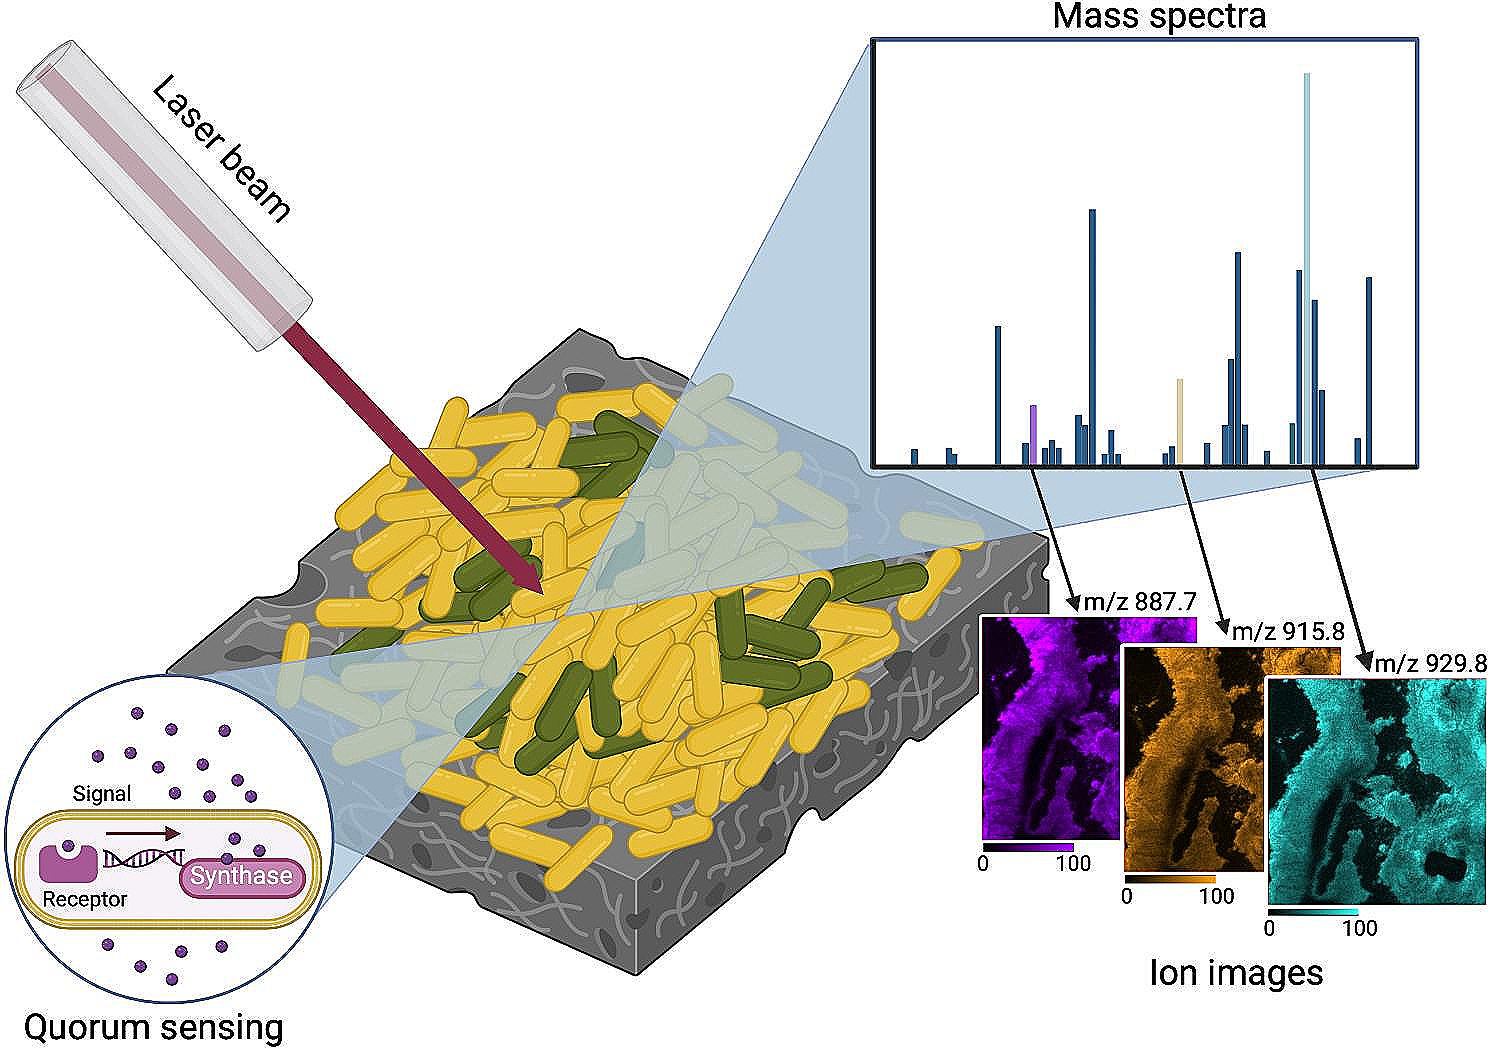 Matrix-assisted laser desorption/ionization mass spectrometry imaging for quorum sensing